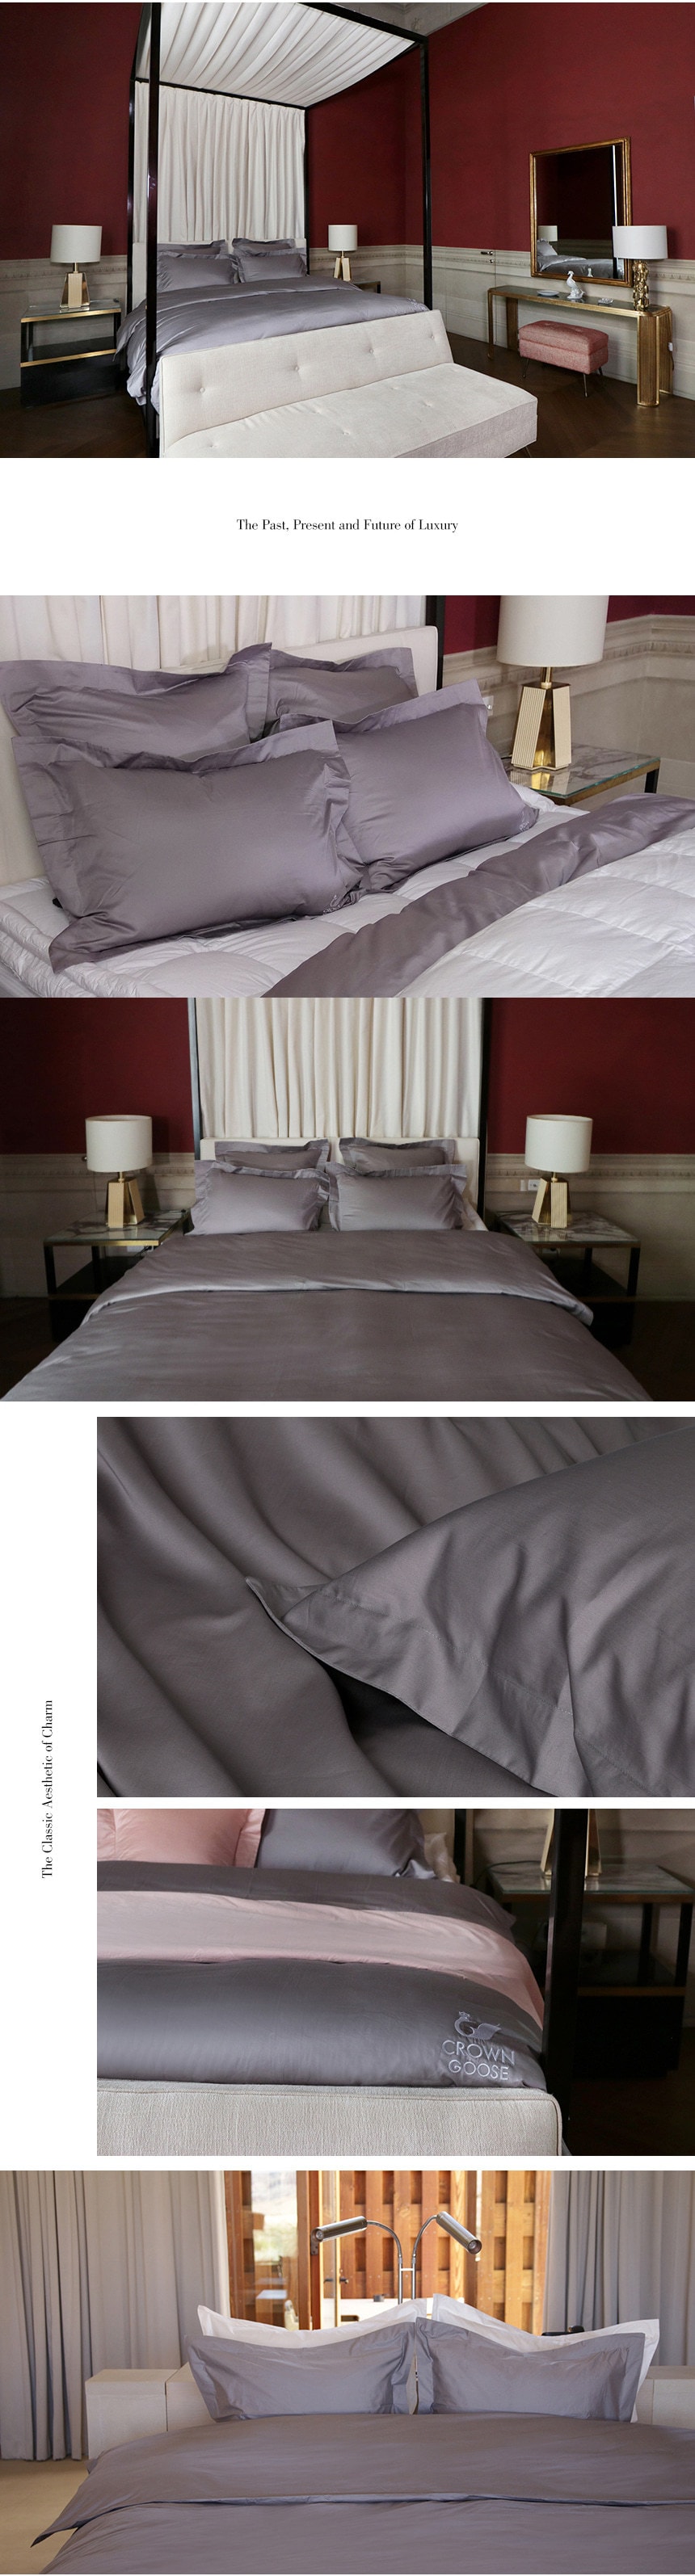 Luxurious Duvet Cover Set Premium 100% Cotton 100S (500 TC) - Sopor Collection #Gray King Size